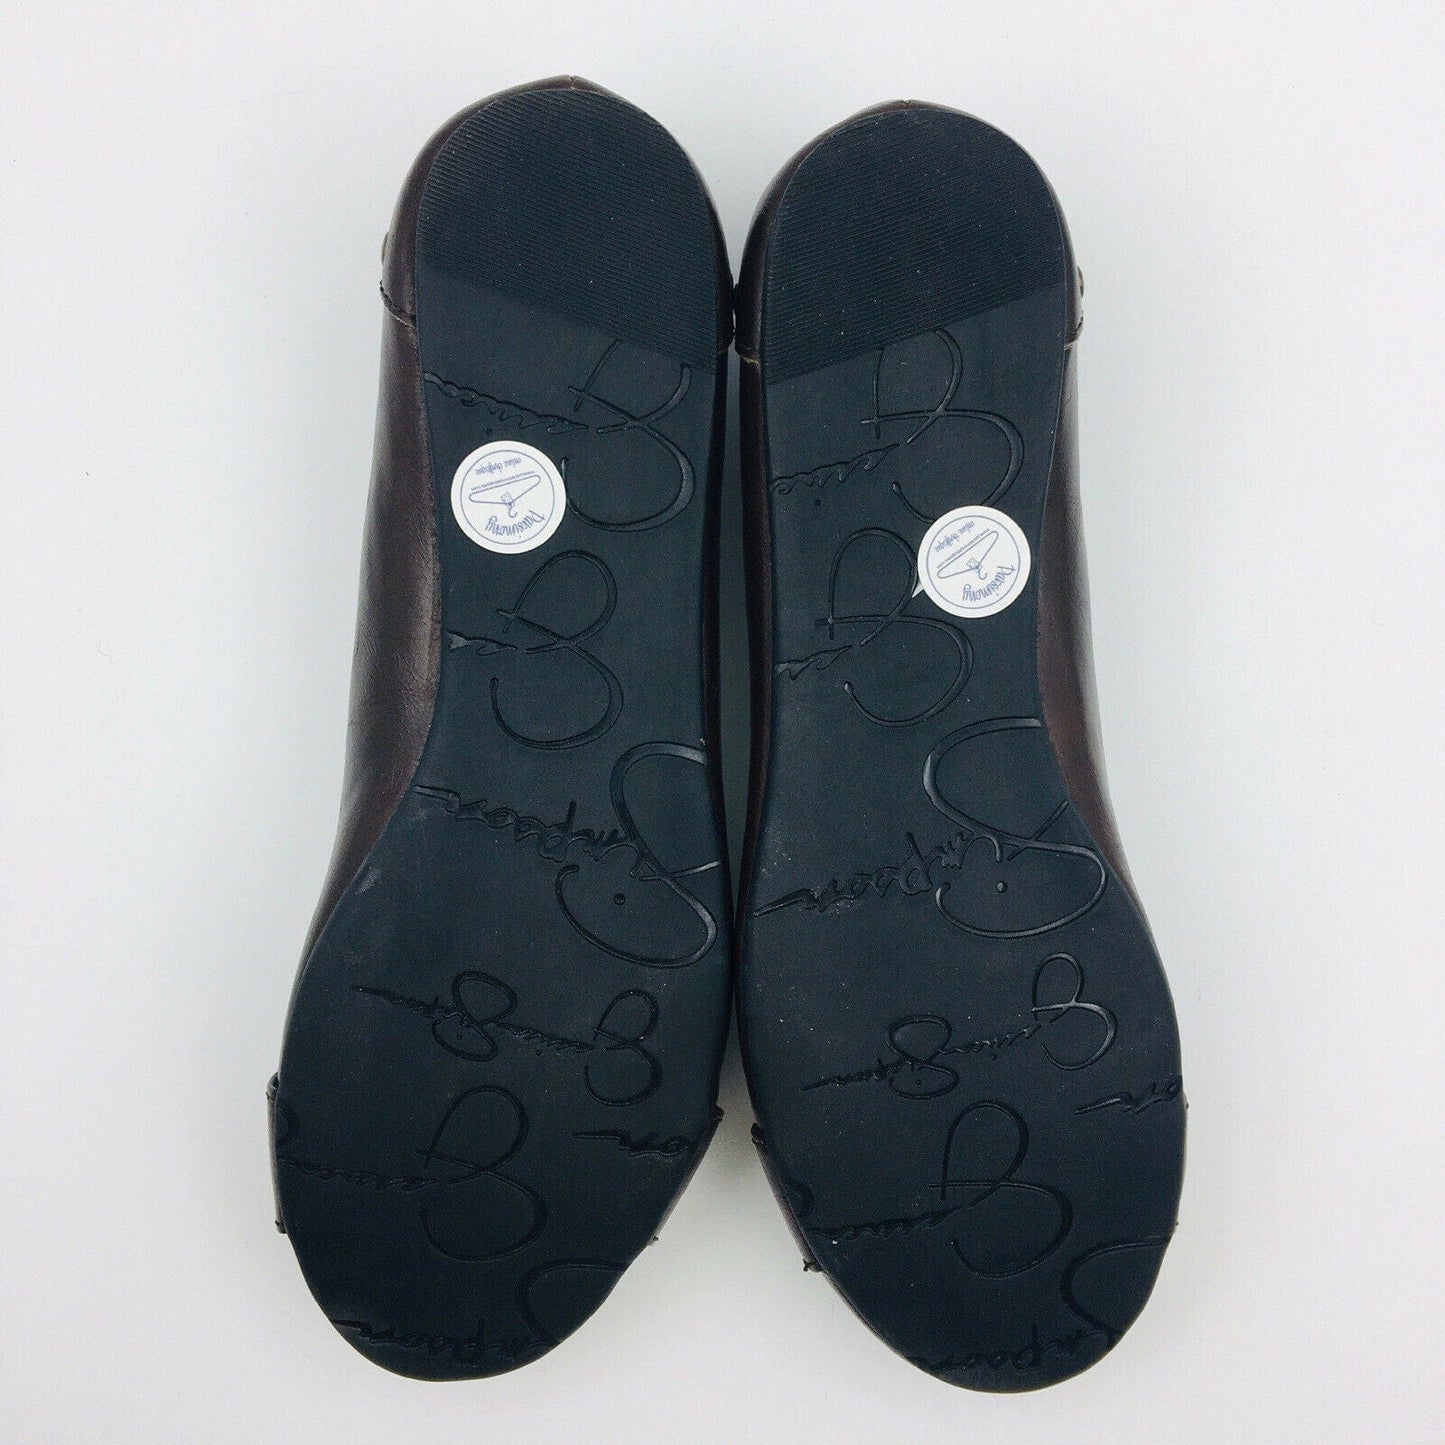 Jessica Simpson Womens “Bubella” Flats Shoes, Brown - Size 3M